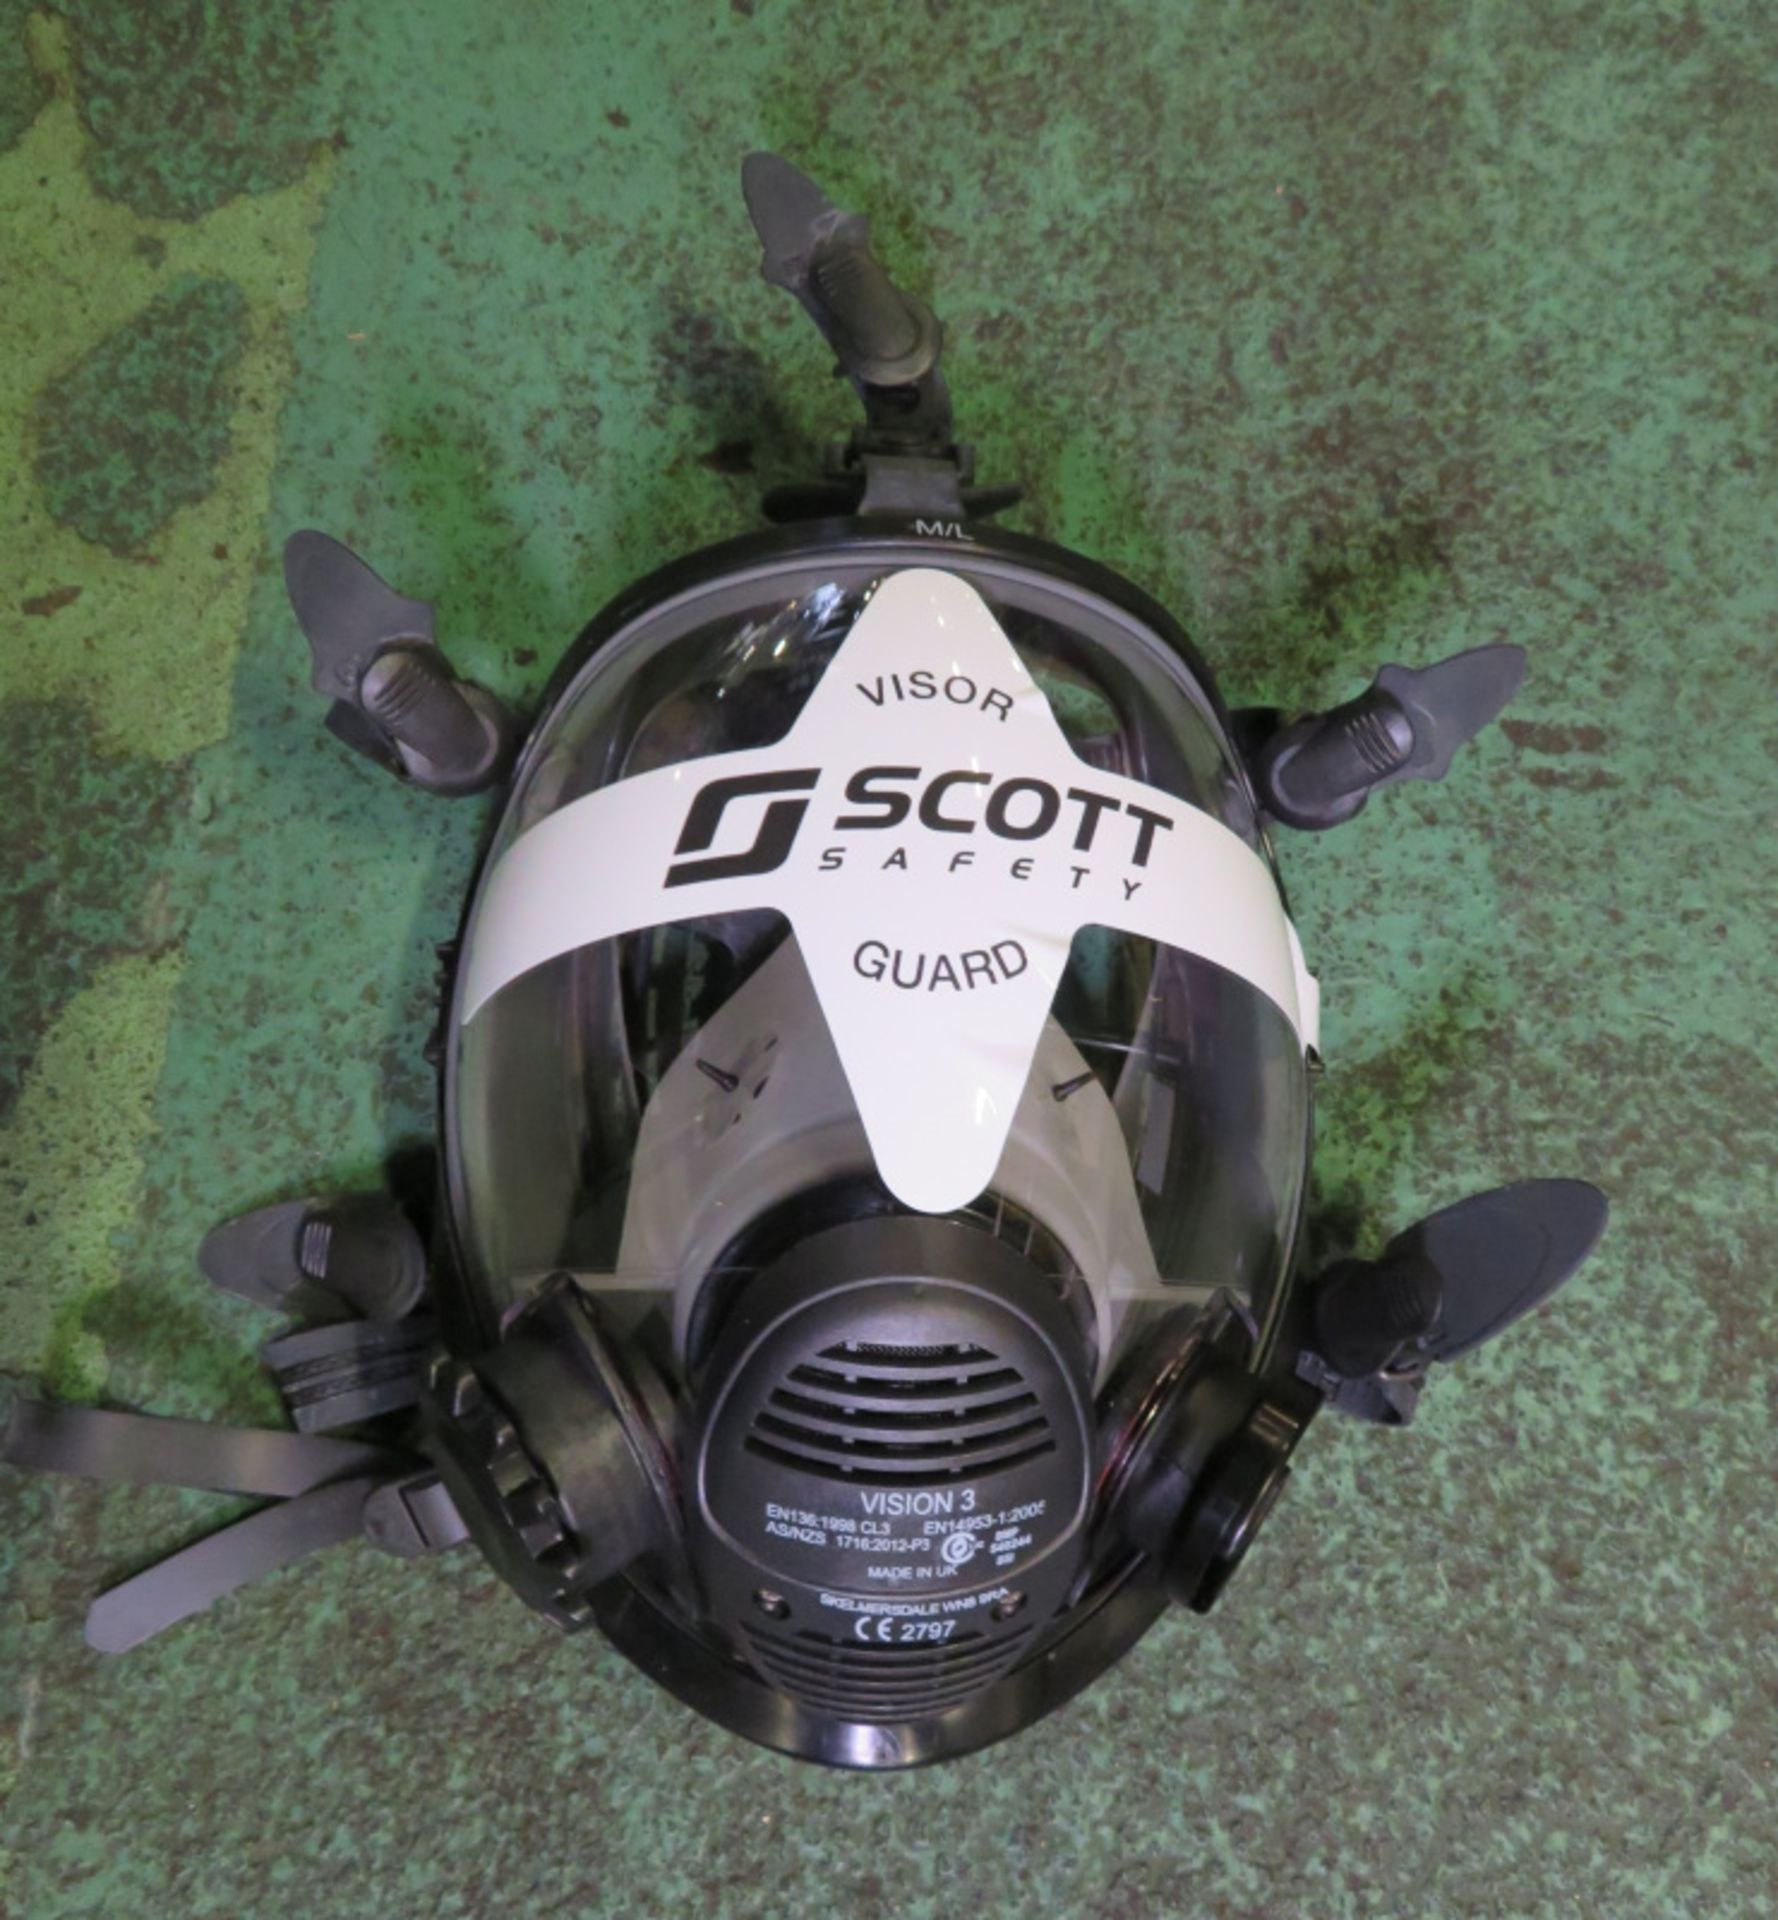 Scott safety visor - Vision 3 - Image 2 of 3